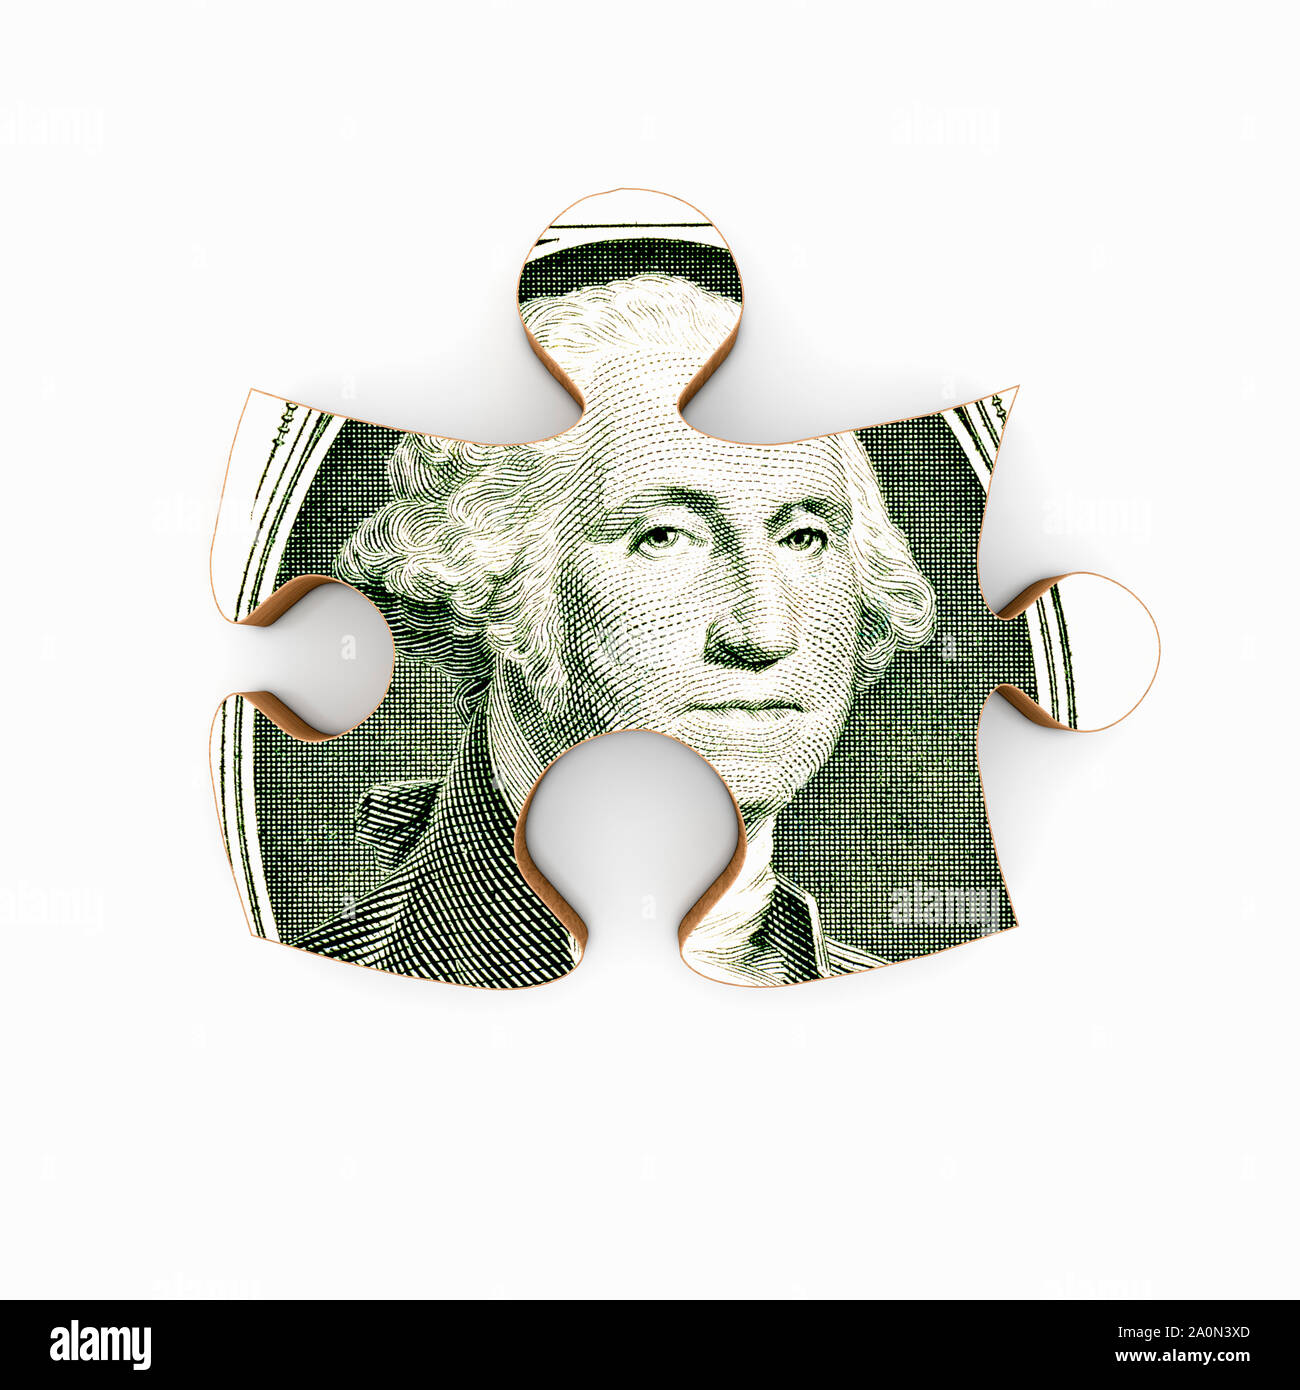 Dollar bill on a jigsaw puzzle piece Stock Photo